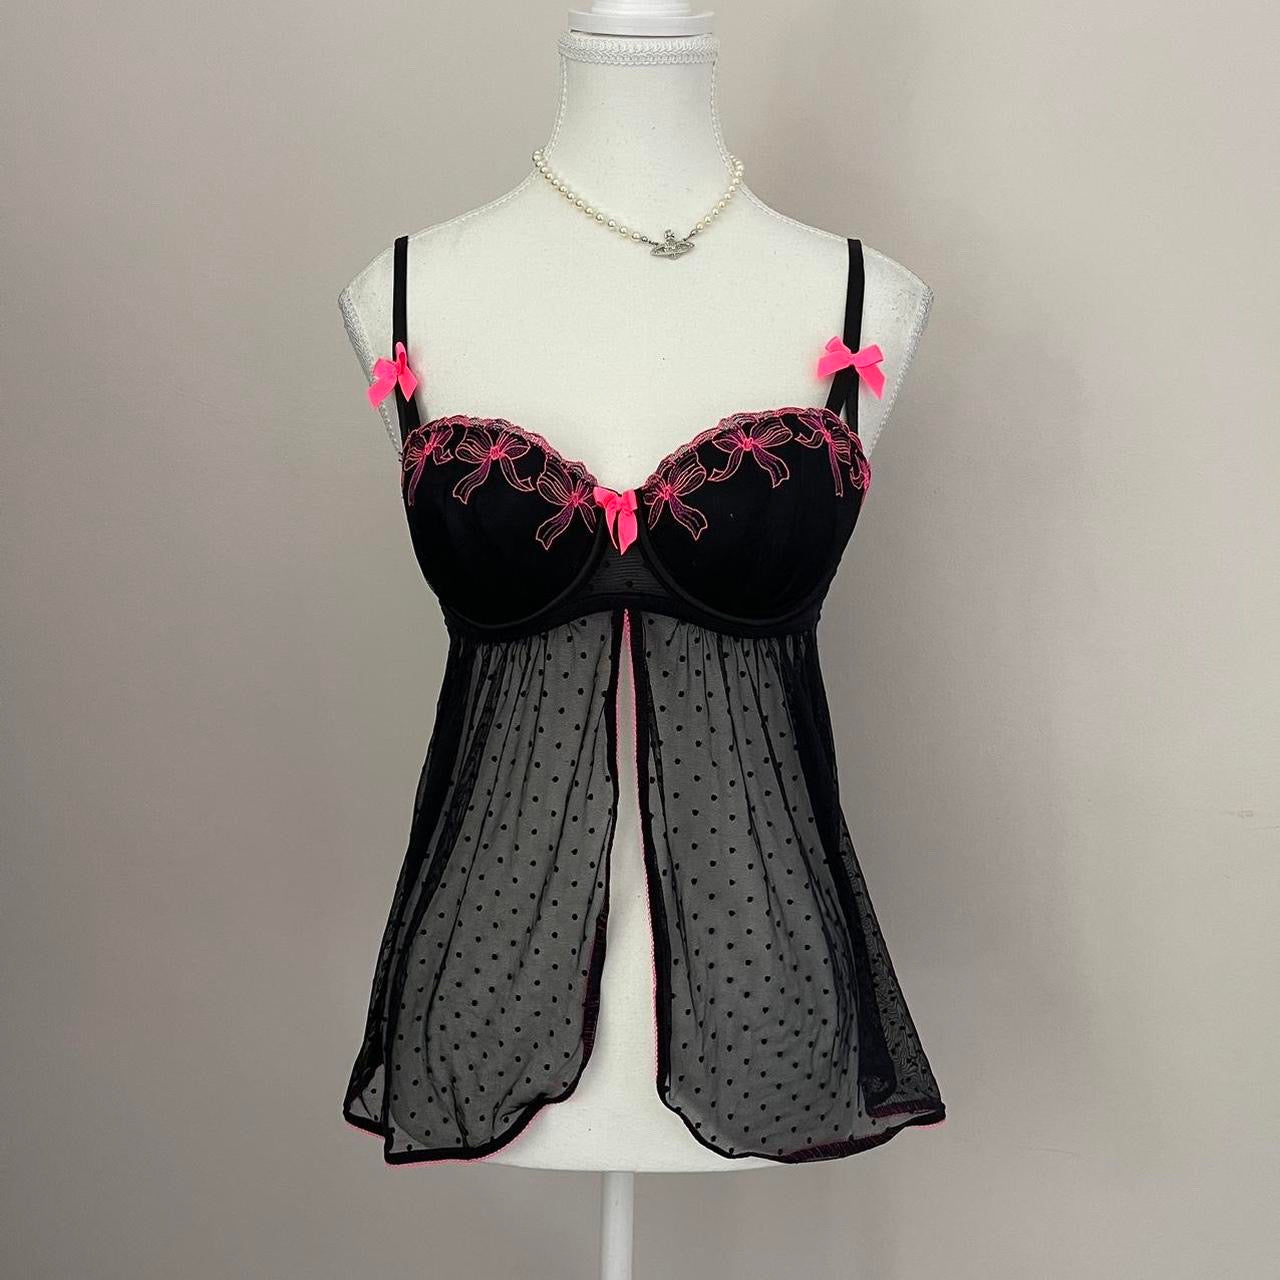 Vintage Victoria's Secret Black Sheer Nightie, Built-In Underwire